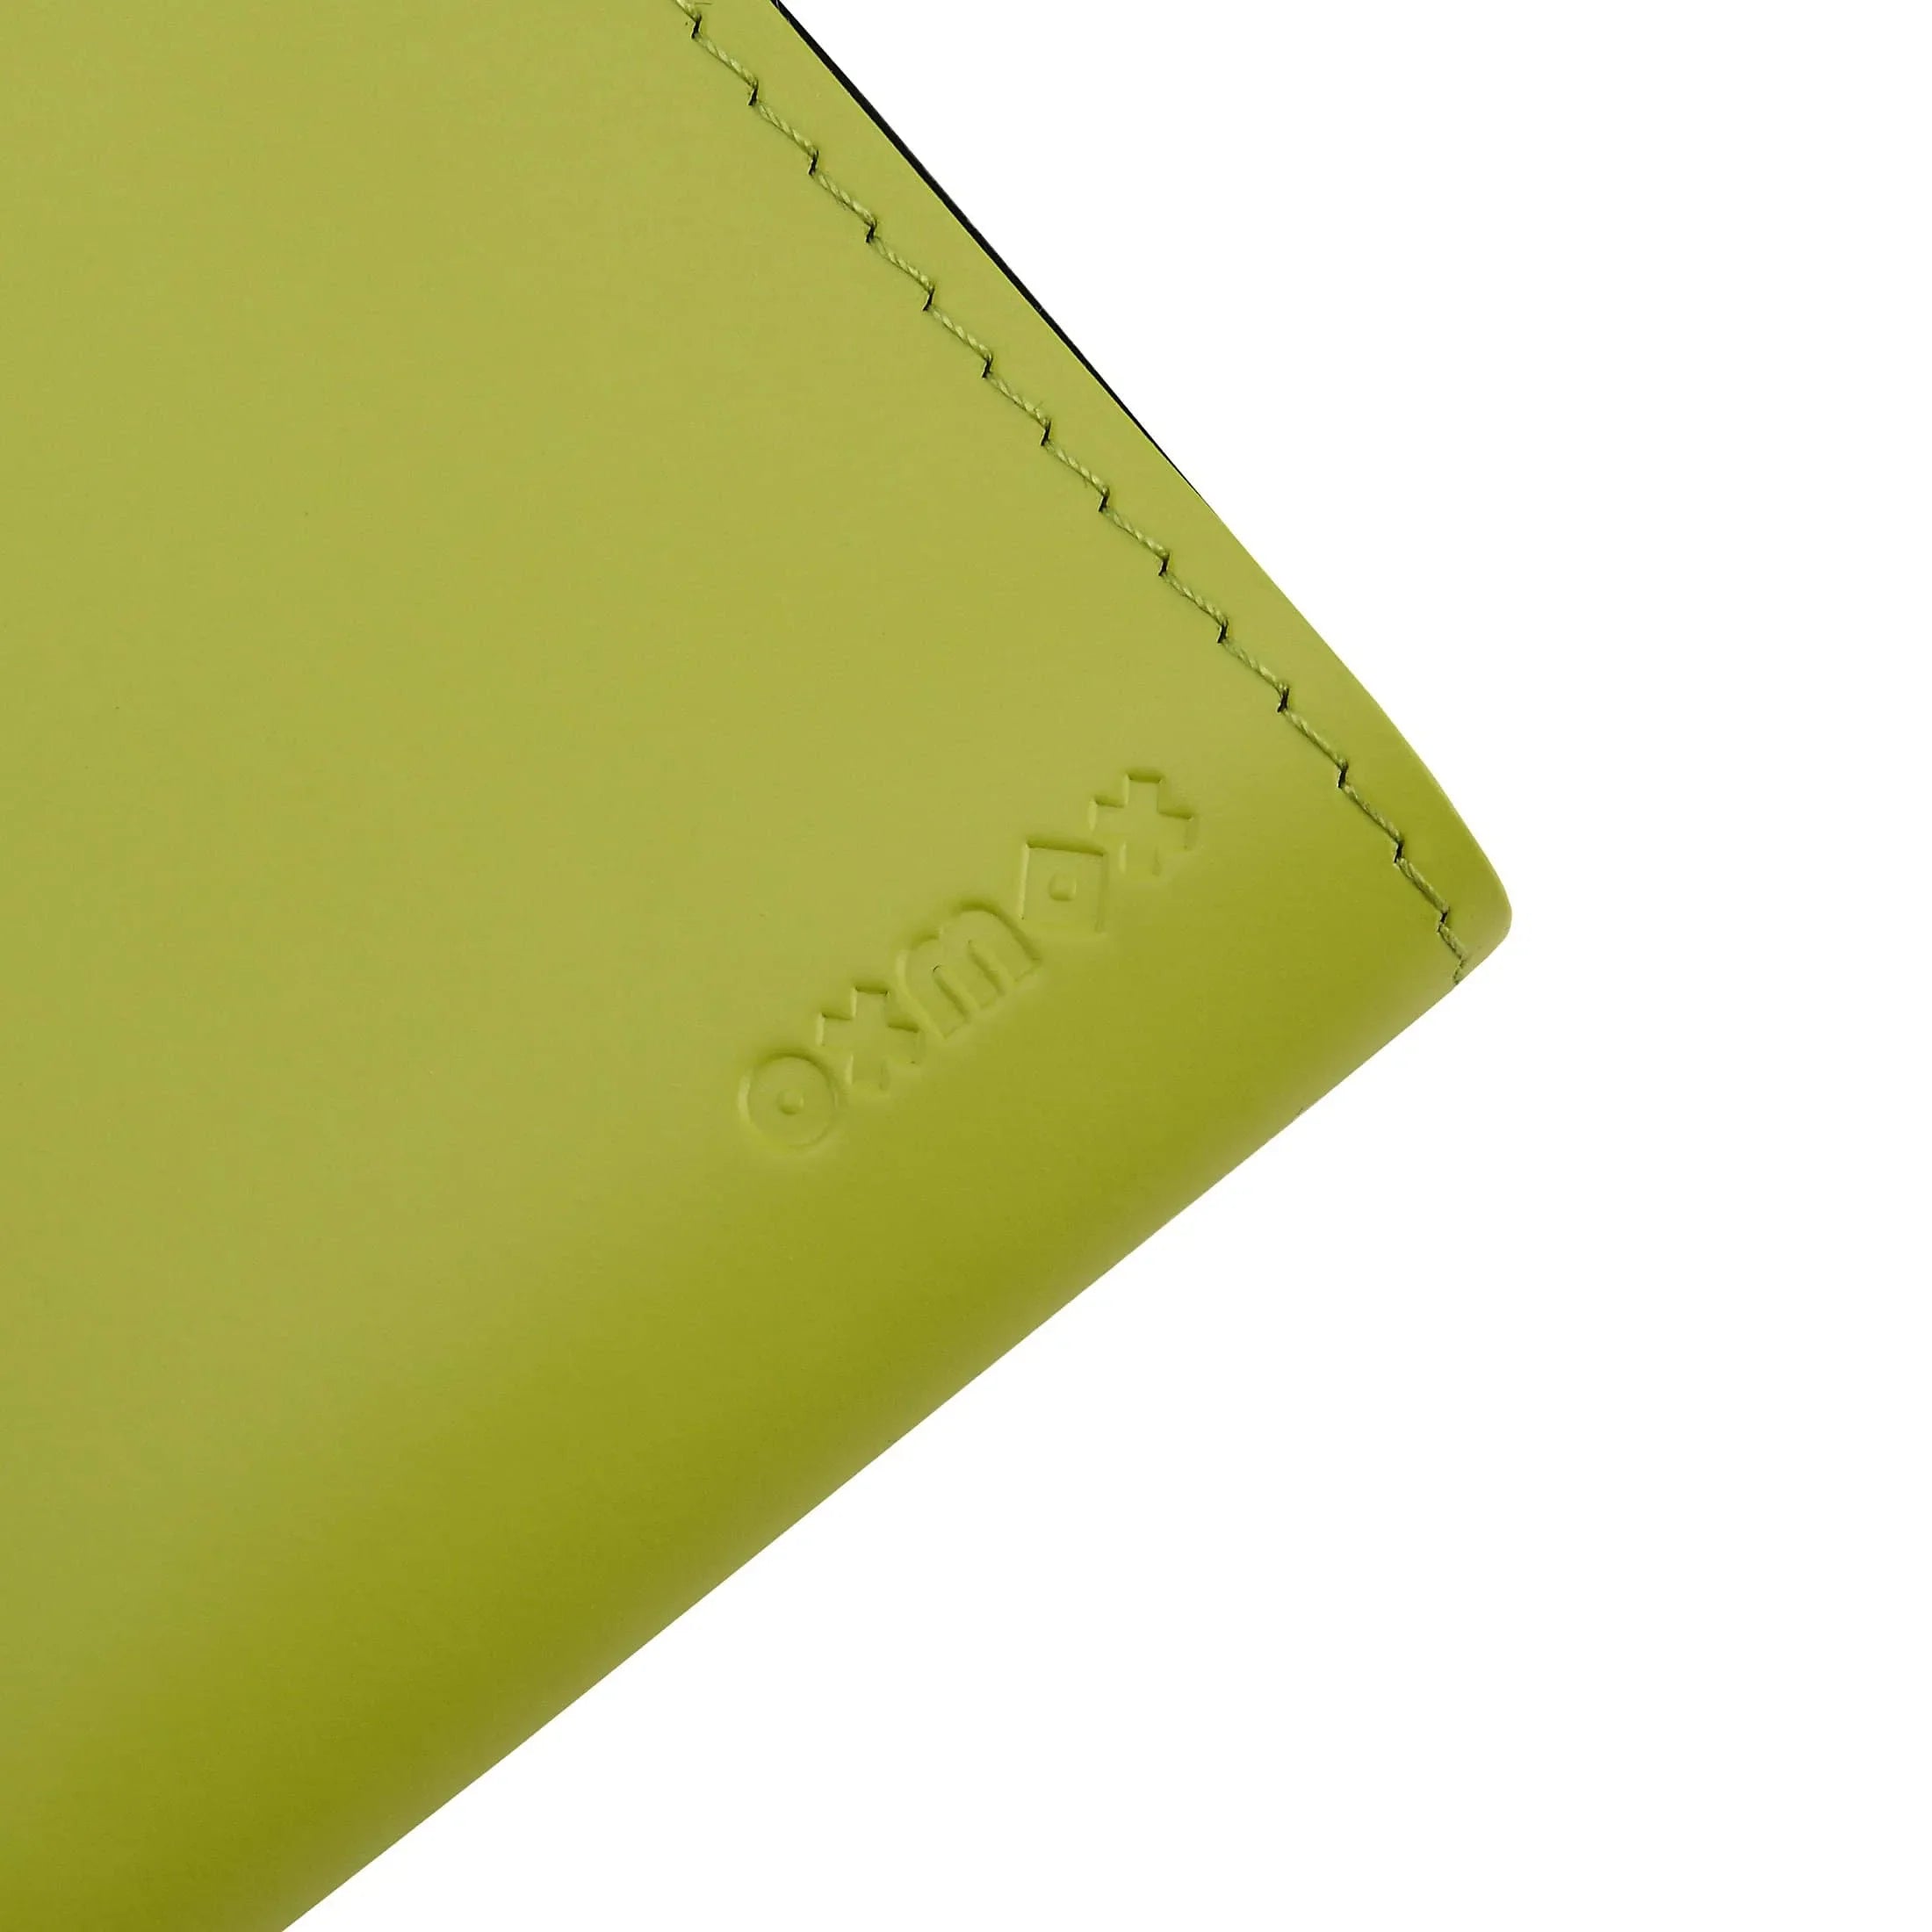 Oxmox Pure iPad-Etui 24 cm - yellow